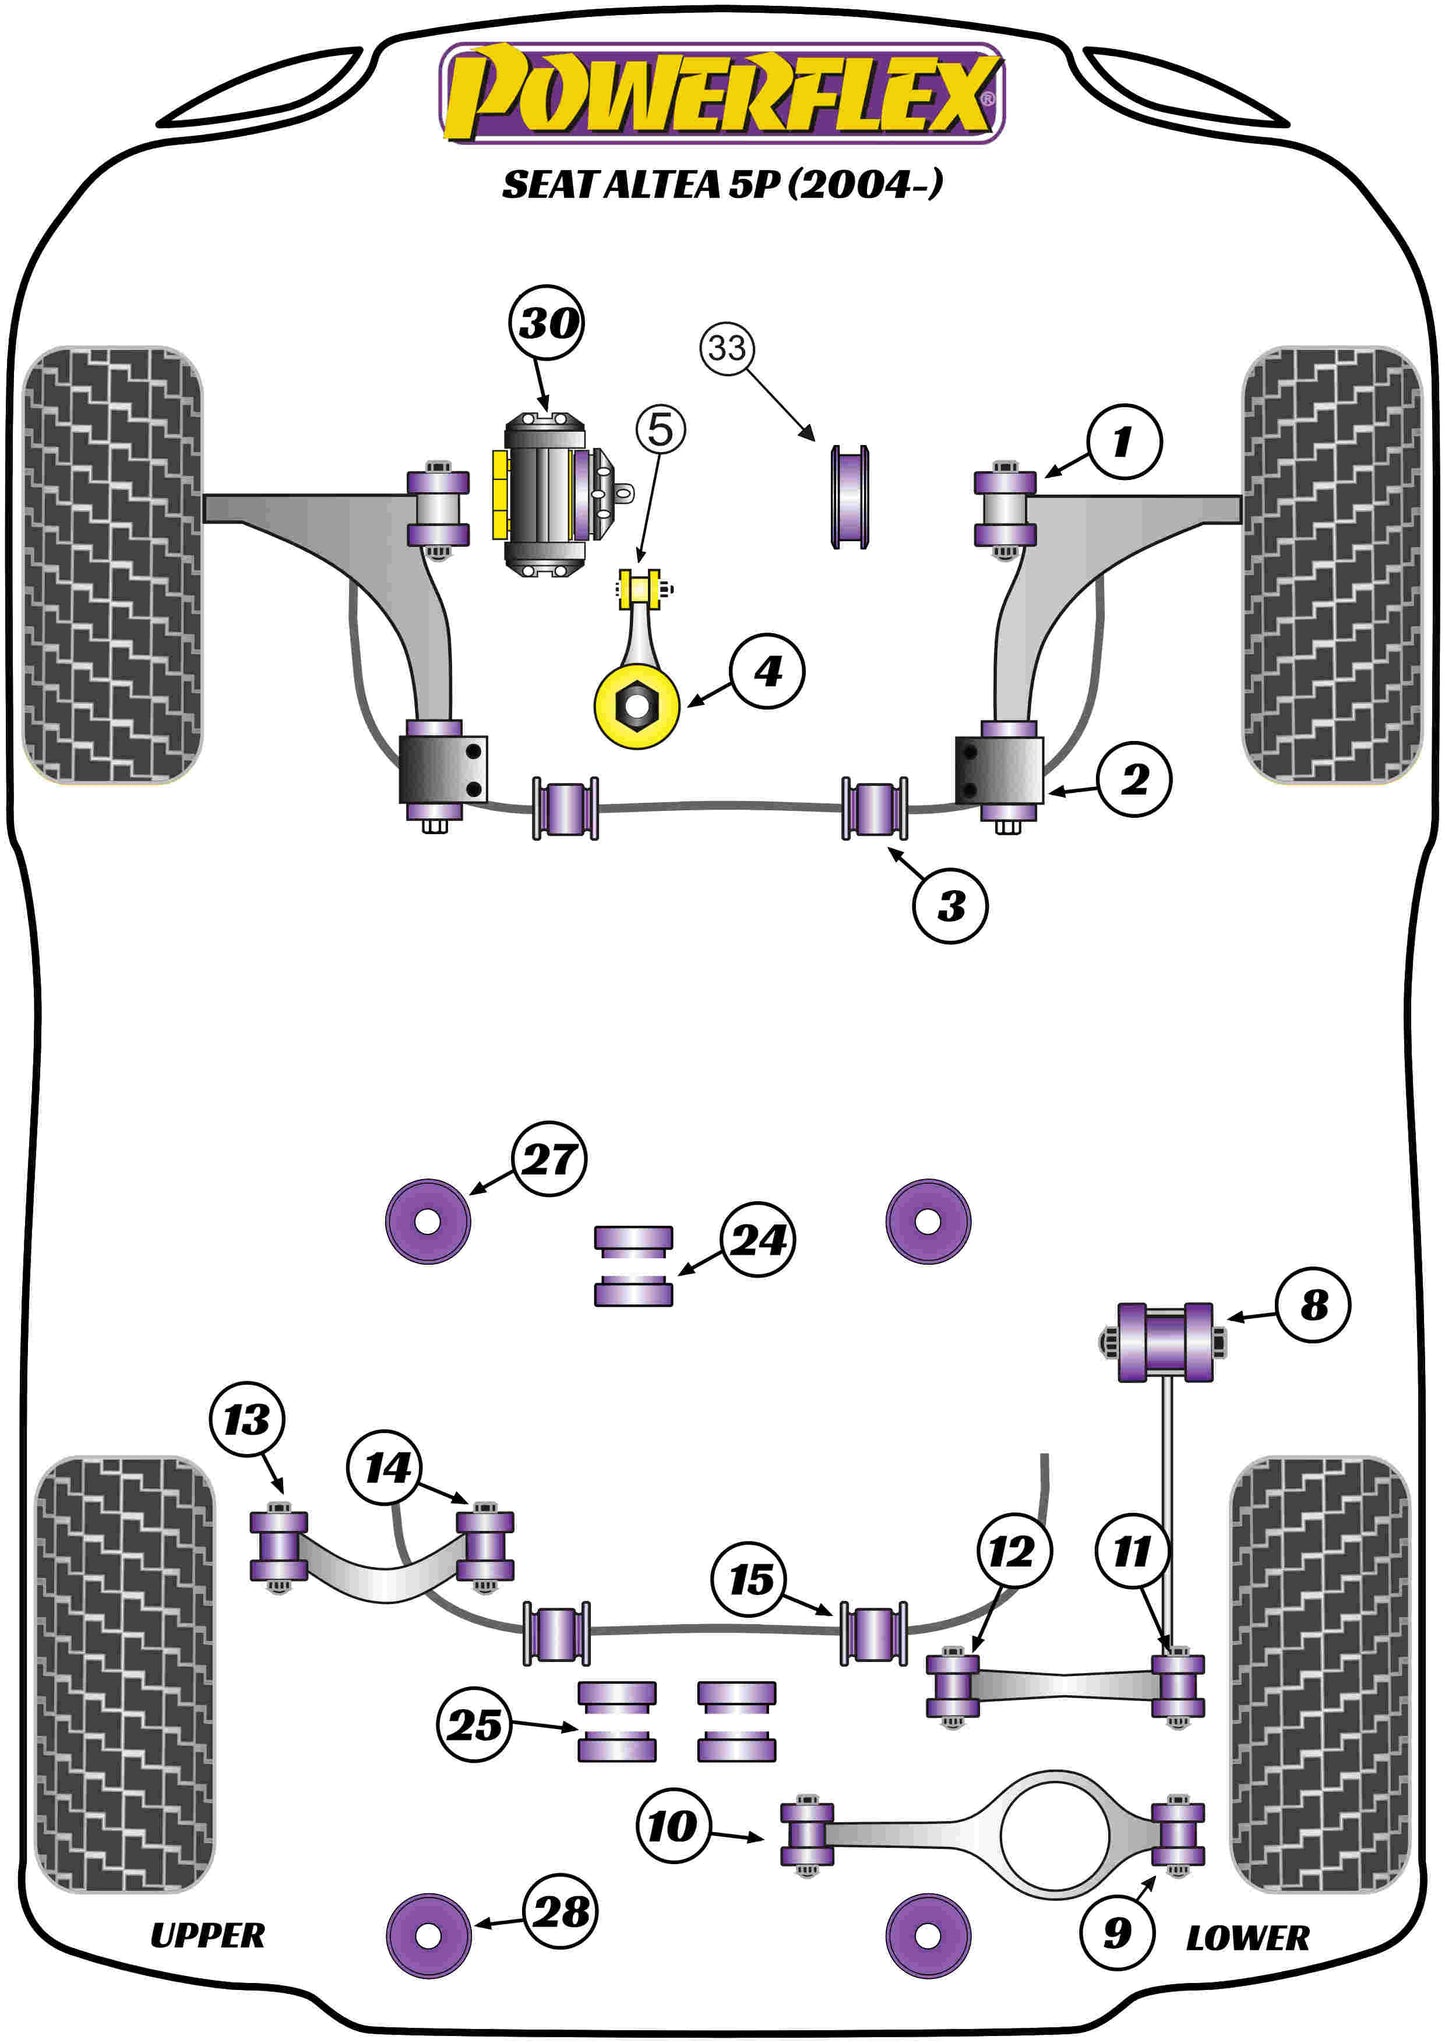 Powerflex Gearbox Mount Insert for Seat Altea 5P (04-)